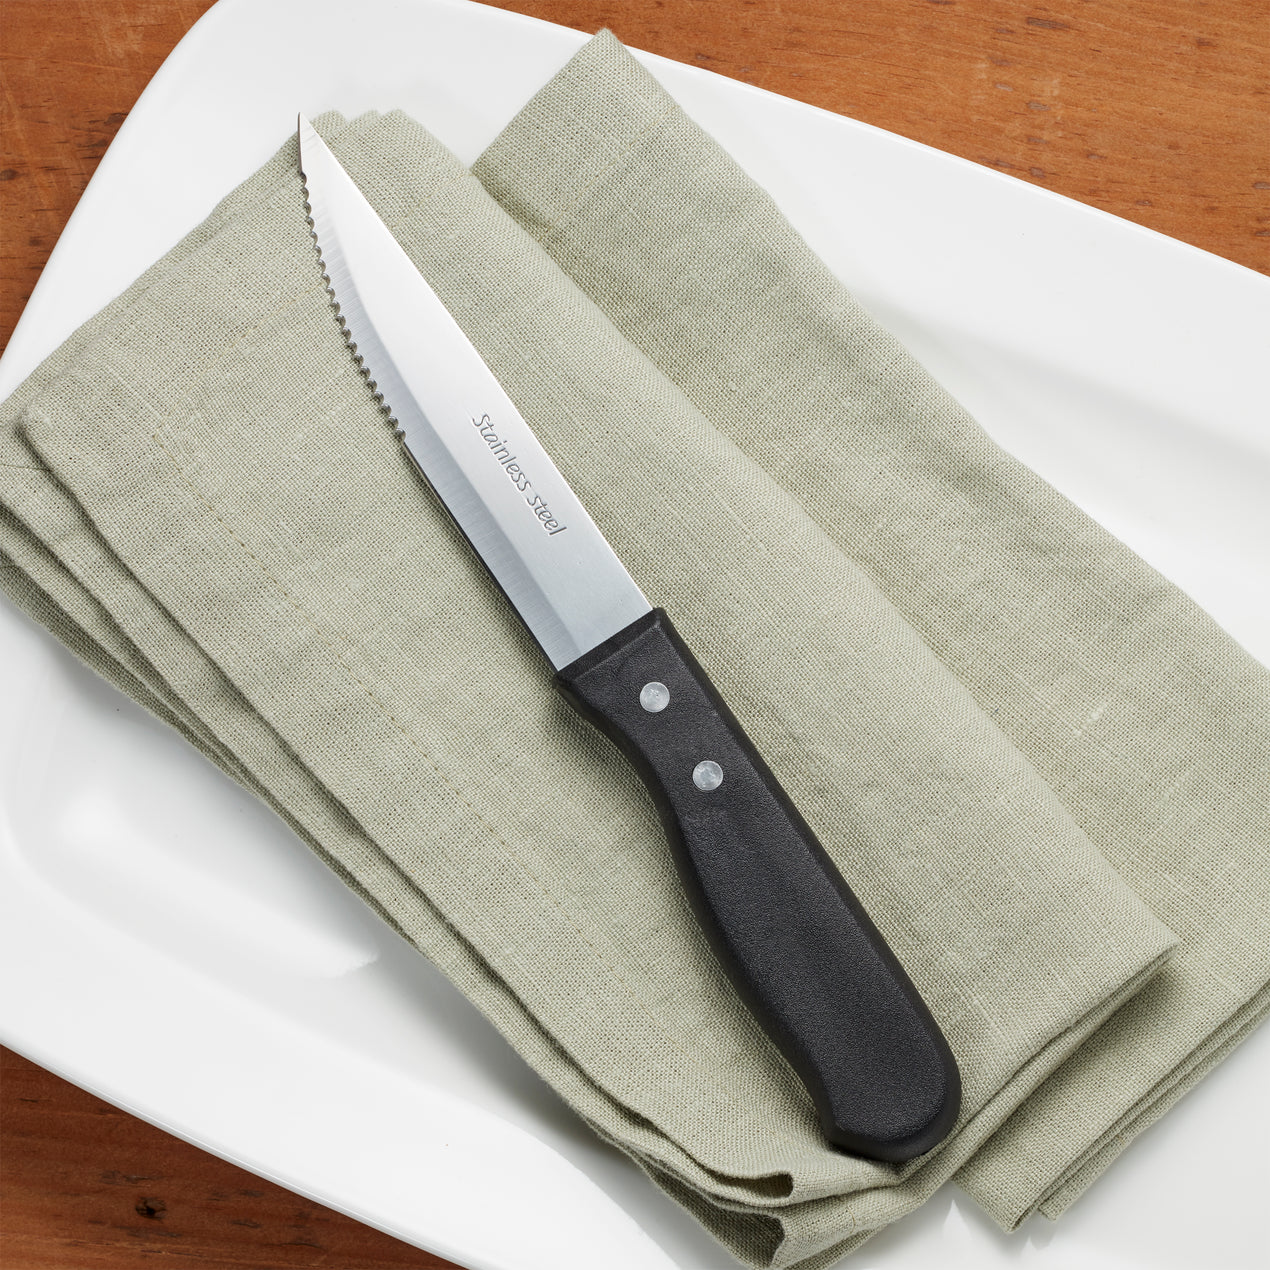 oneida gourmet company set of 4 steak knives 8 delmonico series